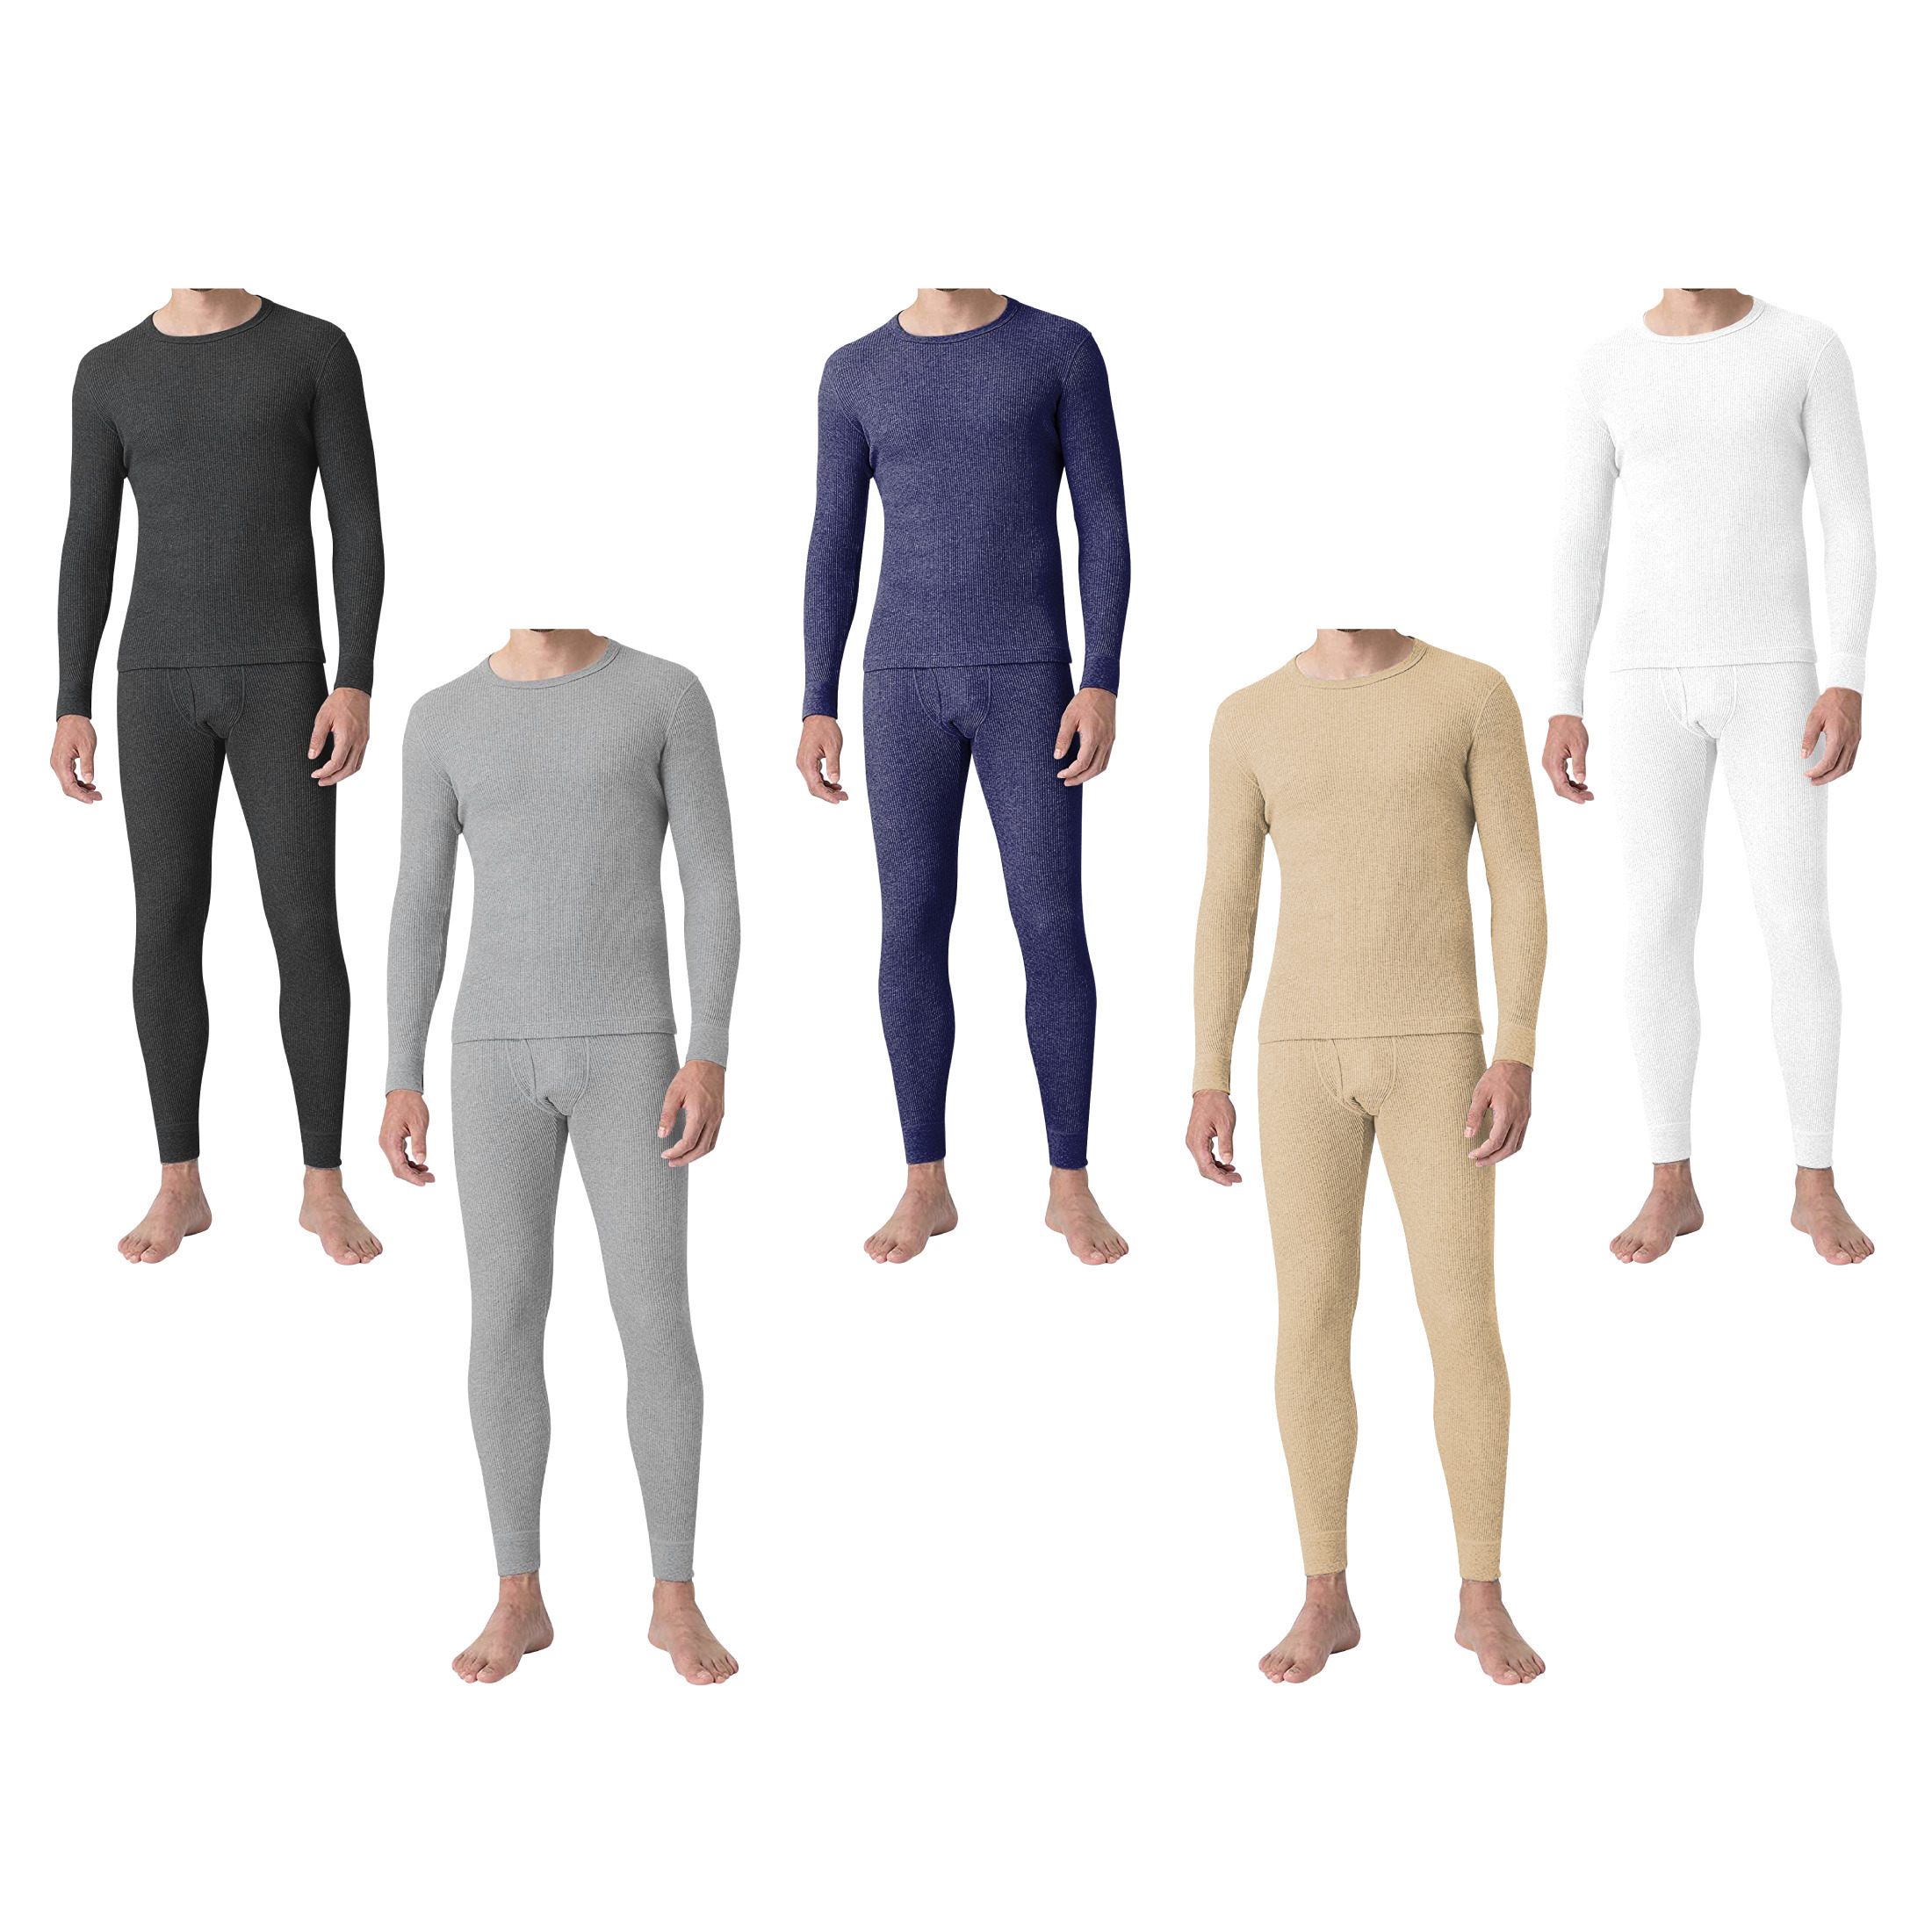 2-Sets: Men's Super Soft Cotton Waffle Knit Winter Thermal Underwear Set - Grey & Grey, Medium